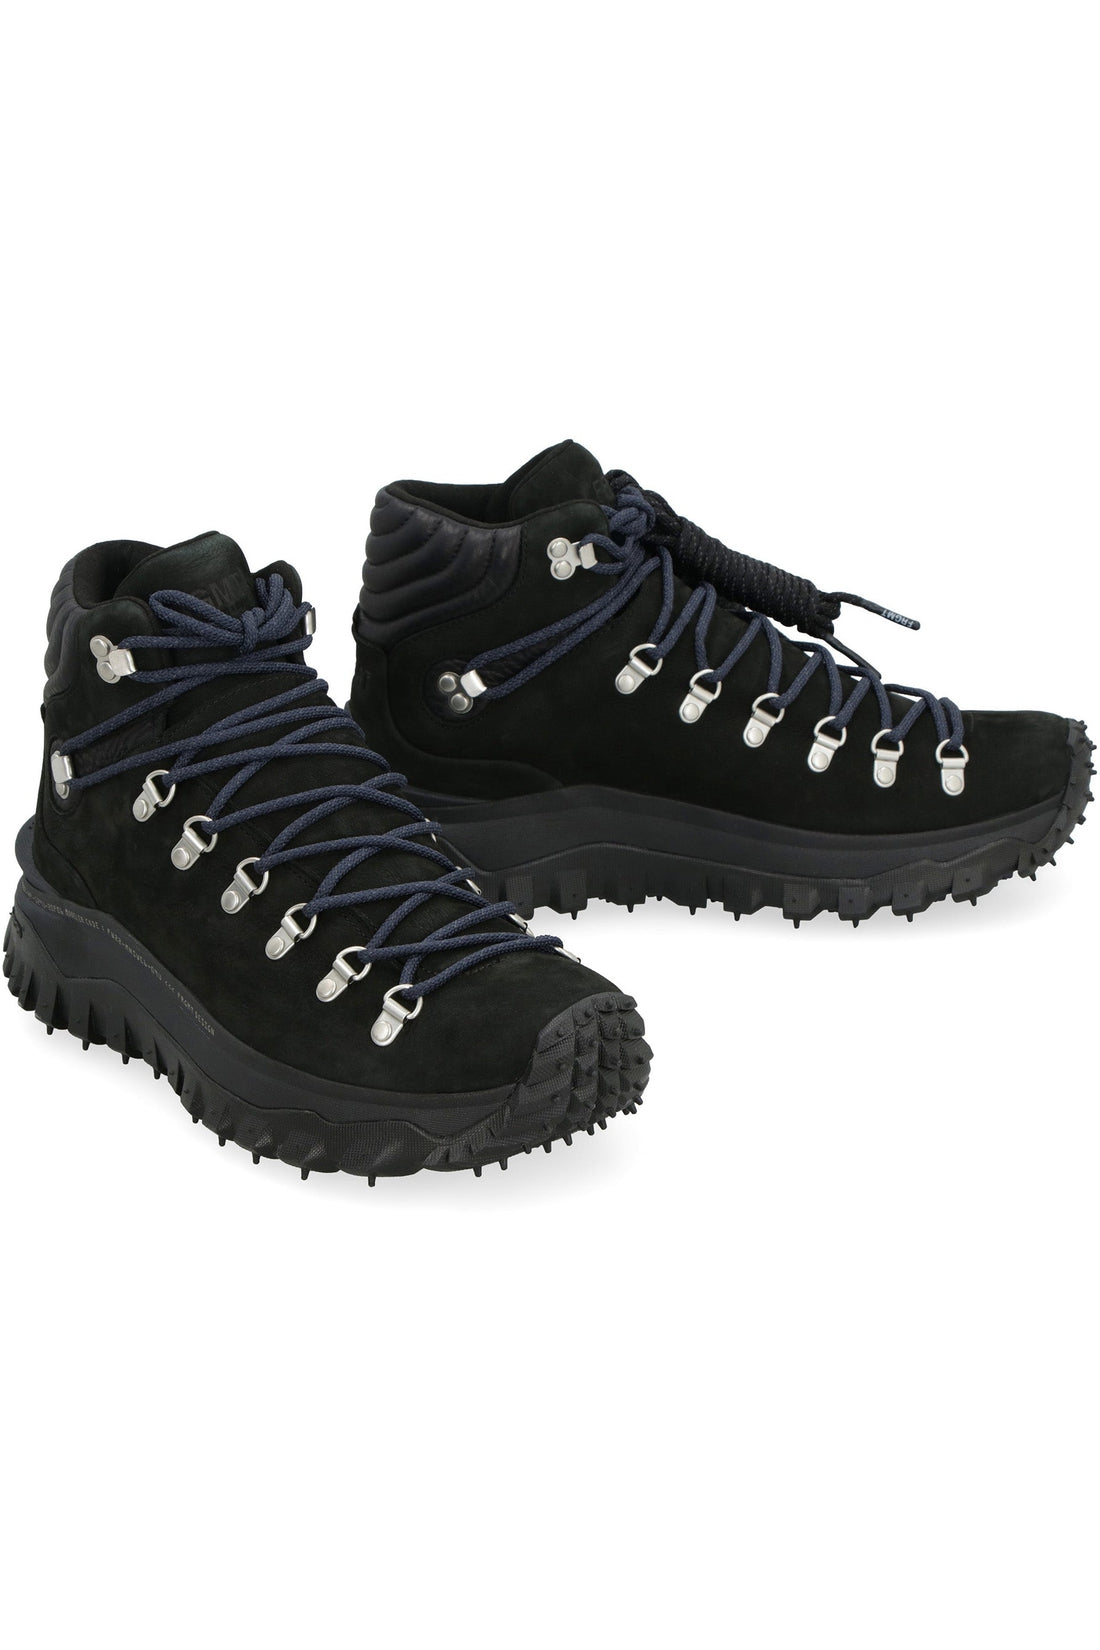 Moncler Genius-OUTLET-SALE-7 Moncler FRGMT Hiroshi Fujiwara - Trailgrip GTX hiking boots-ARCHIVIST